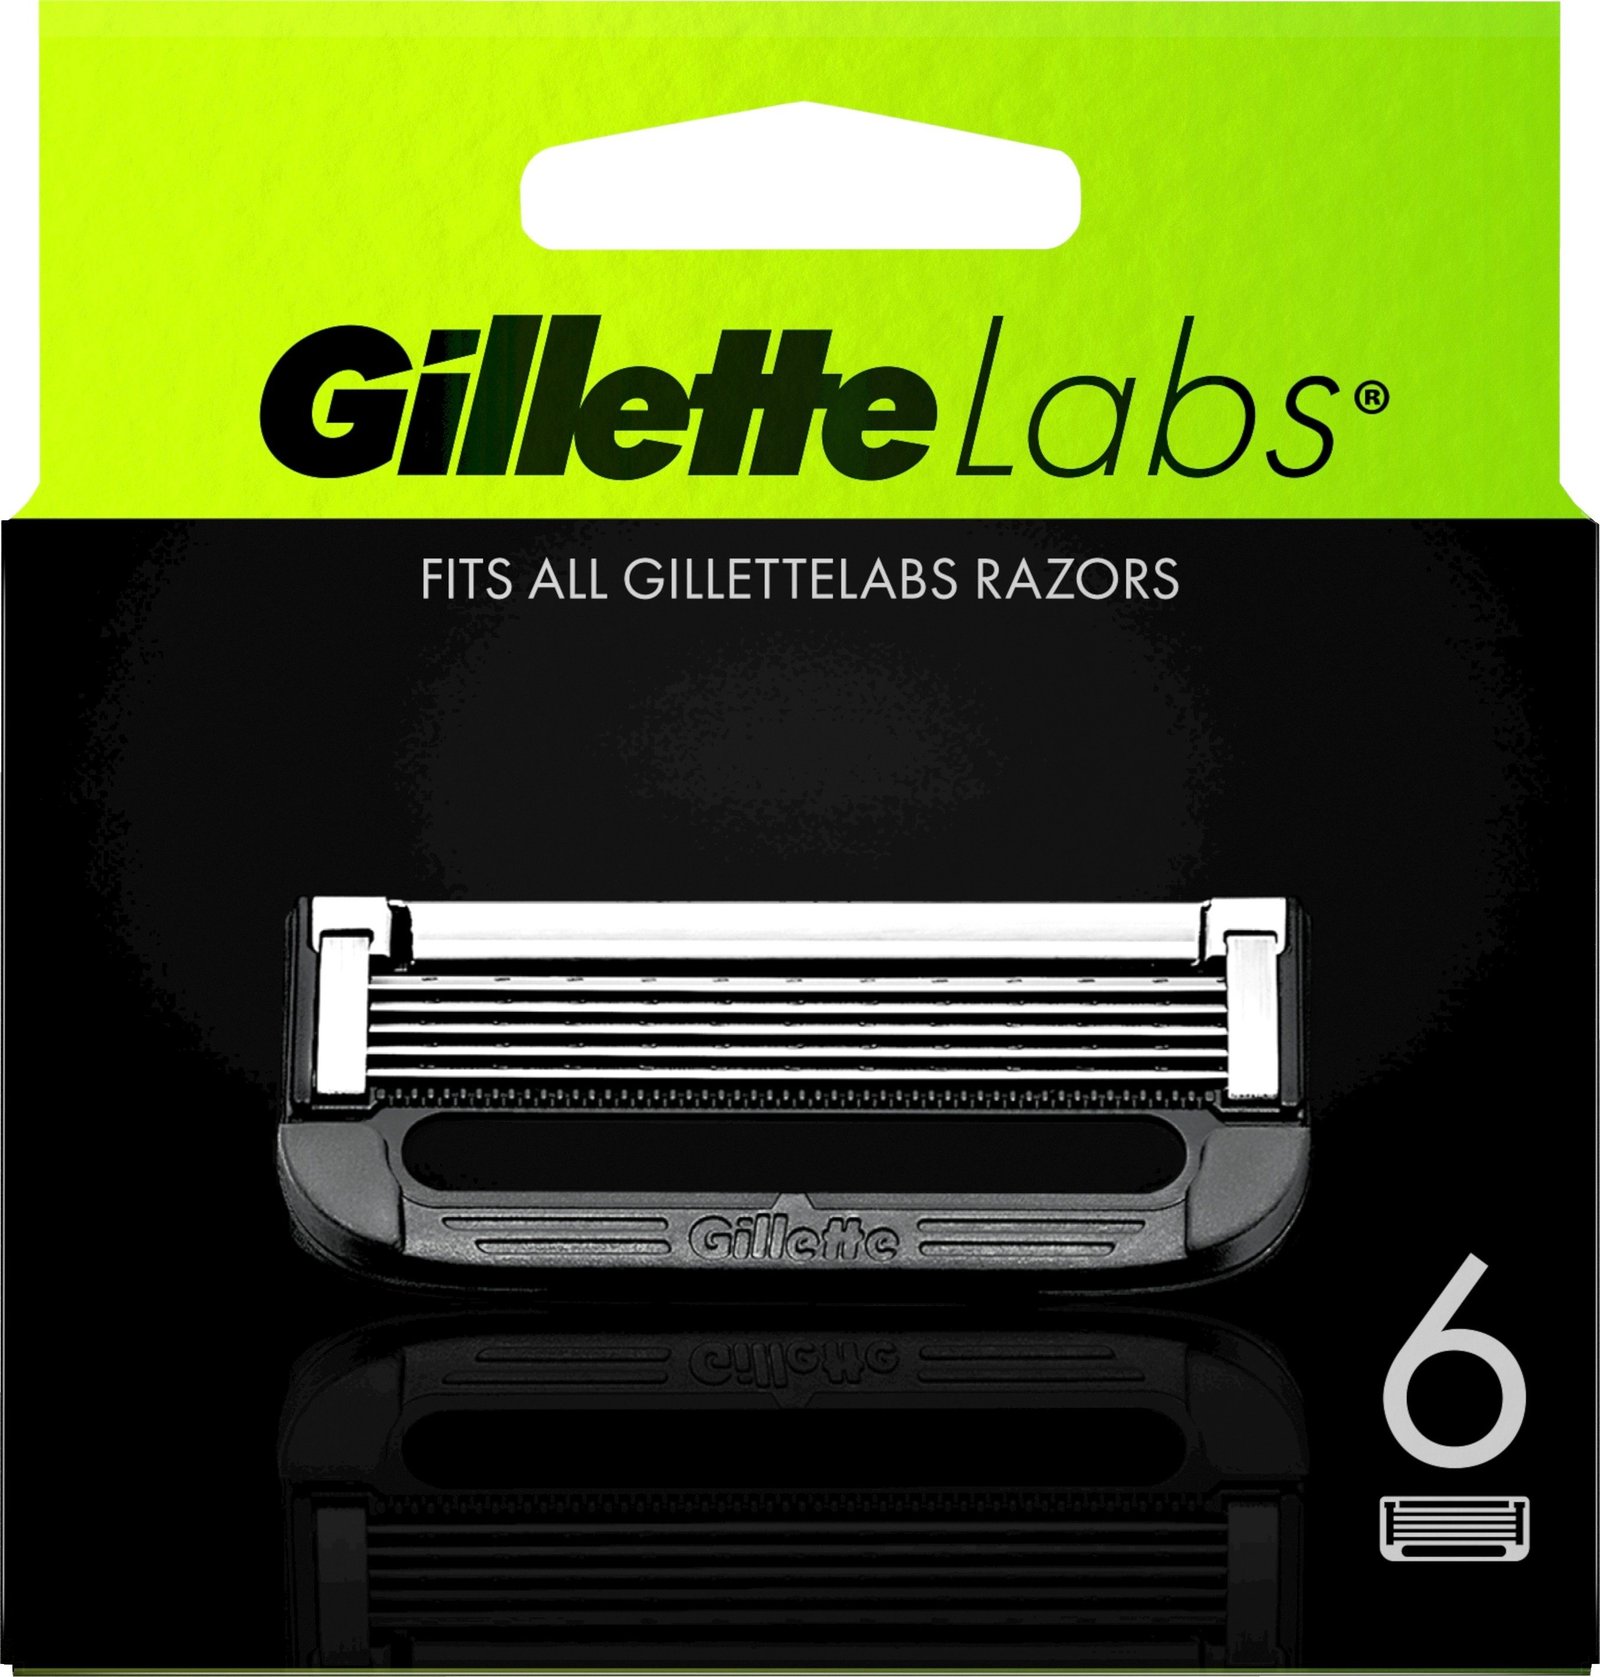 Gillette Labs Rakbladsrefill 6 st